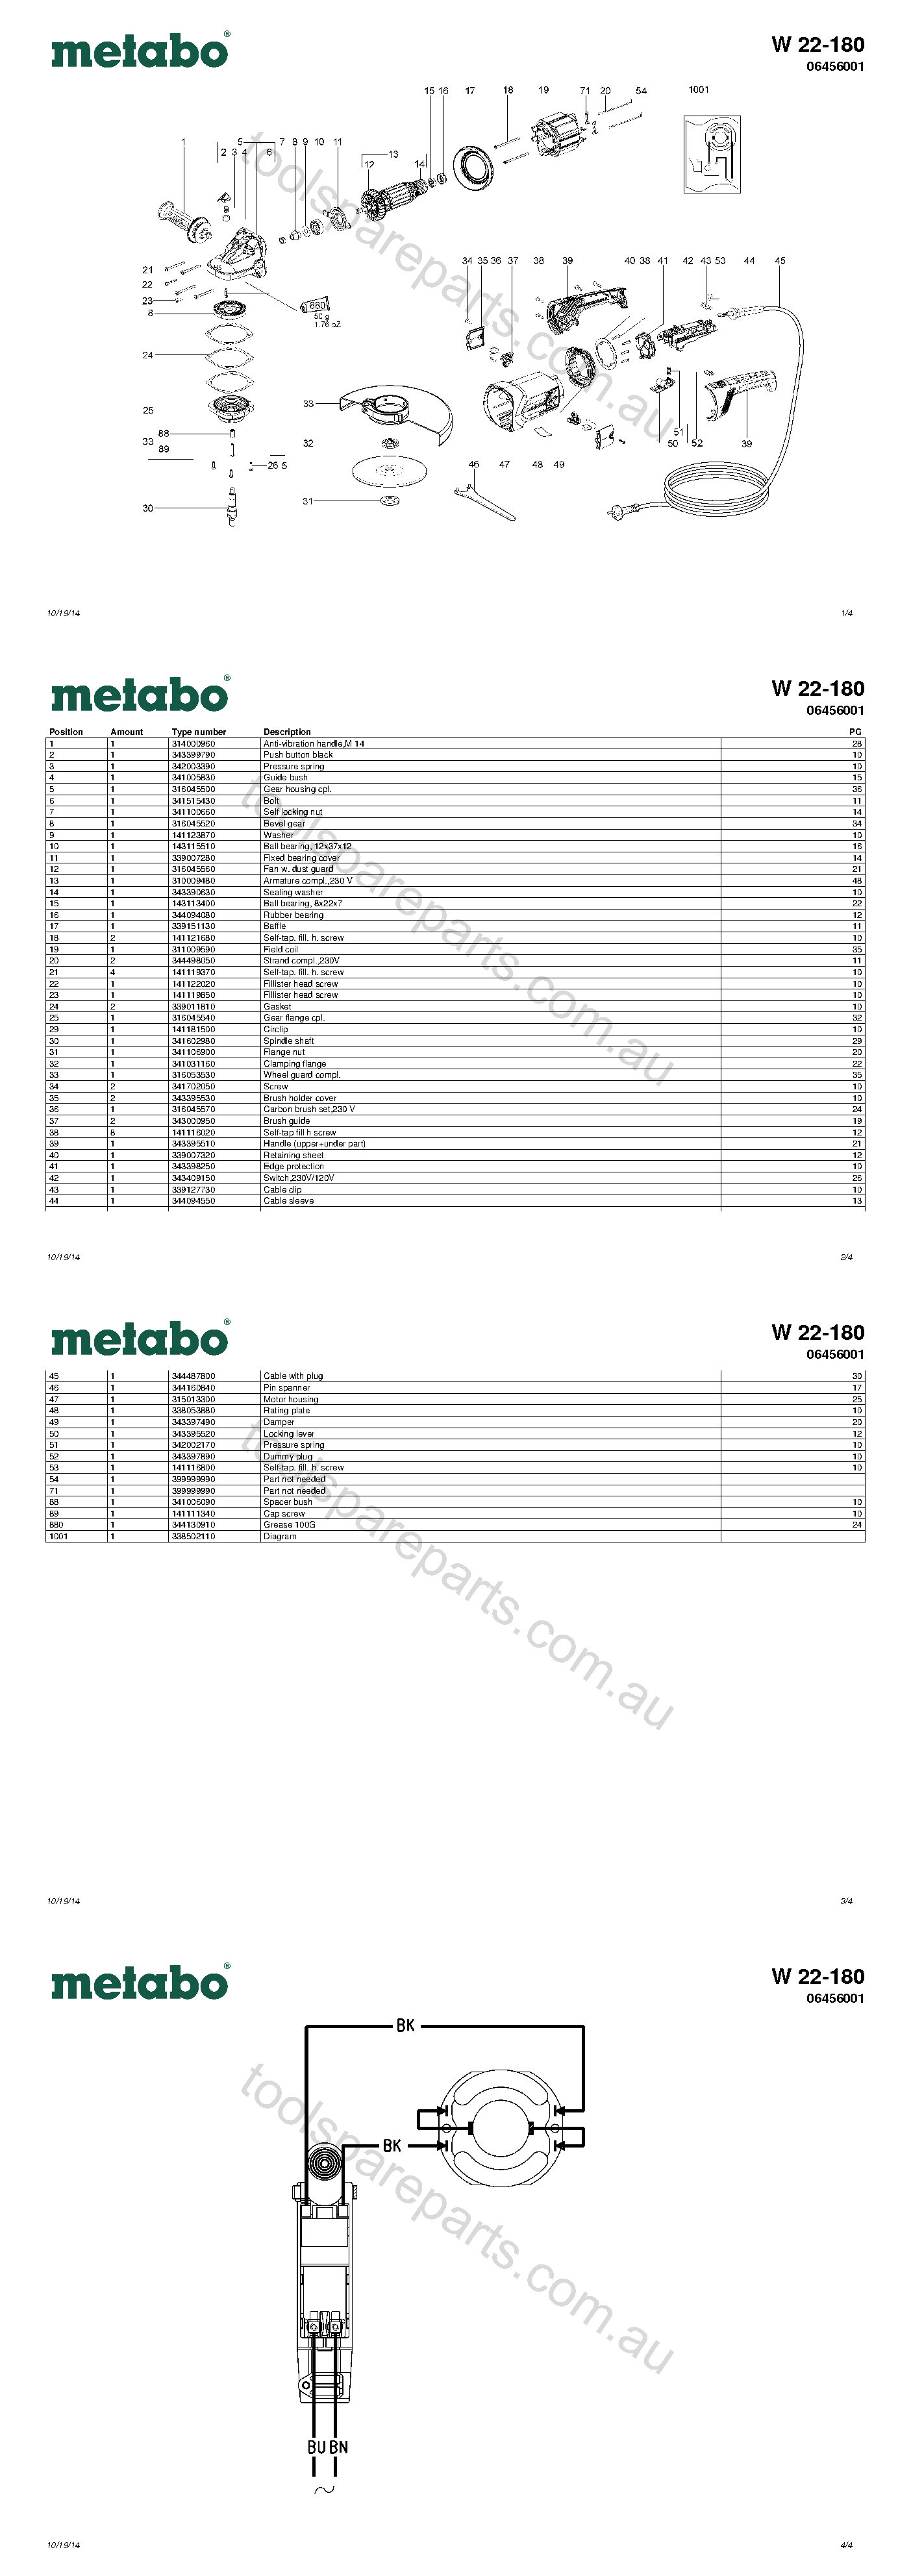 Metabo W 22-180 06456001  Diagram 1